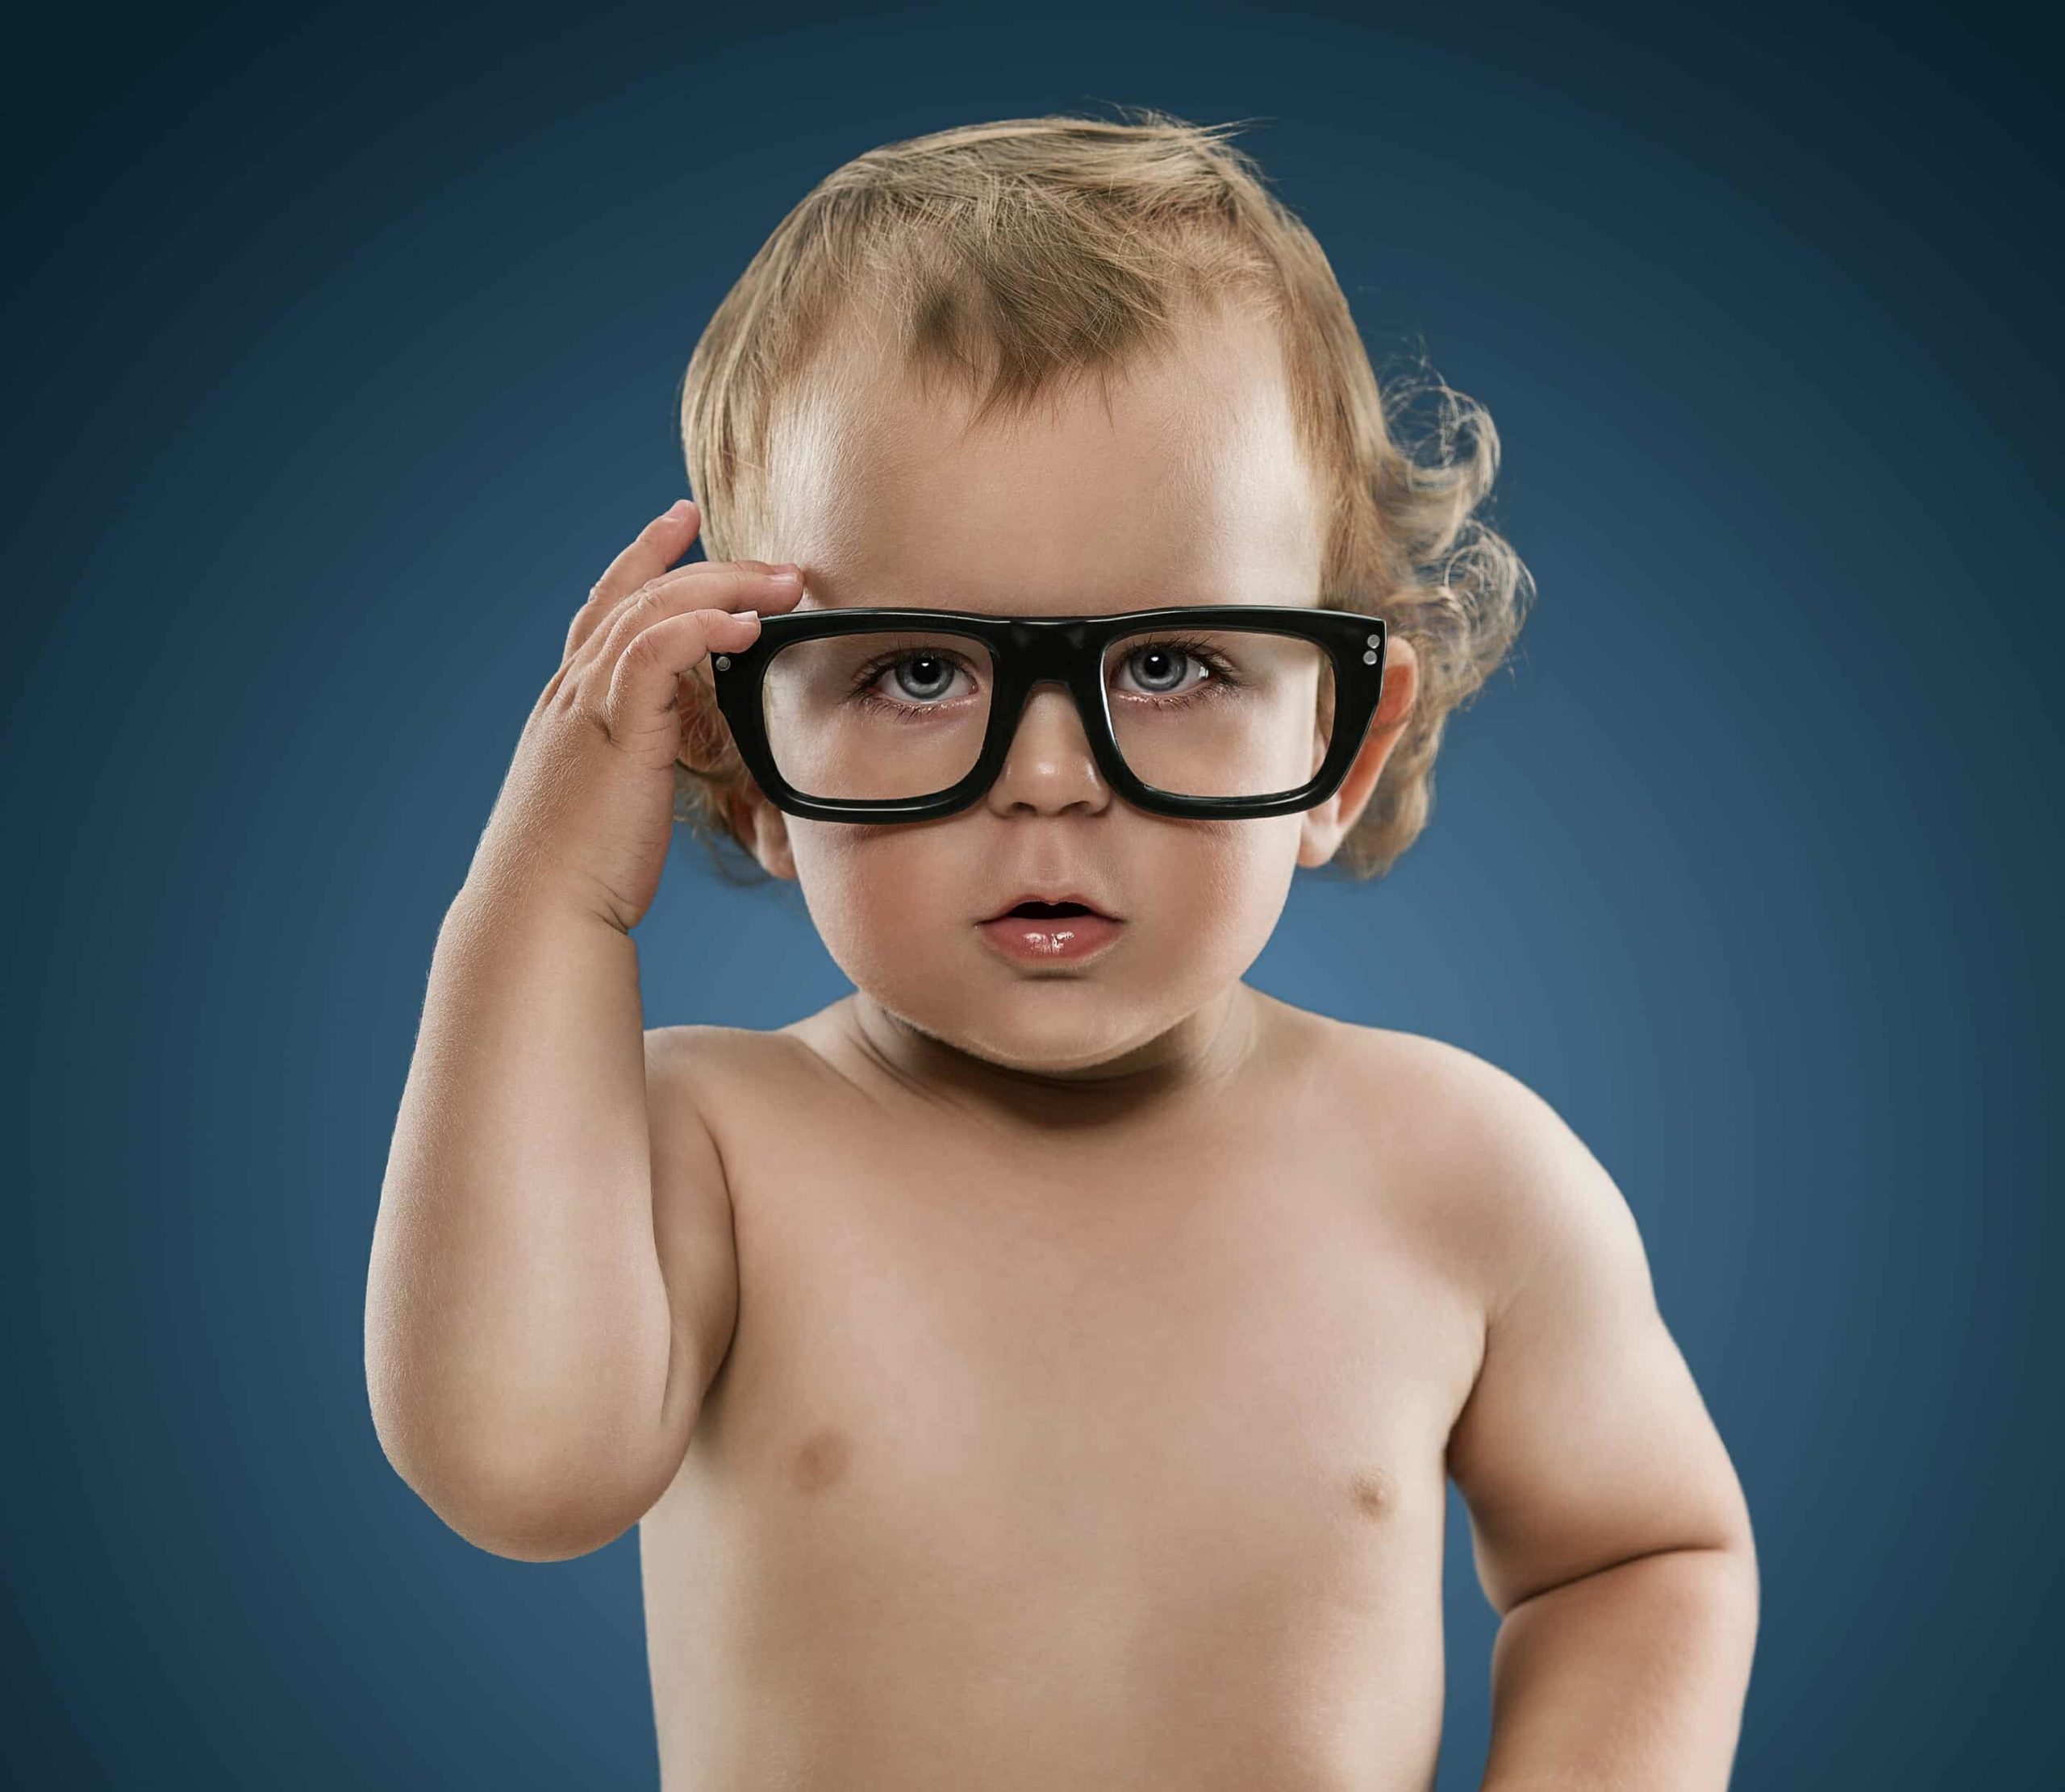 Cute little nerd boy wearing glasses isolation on blue background